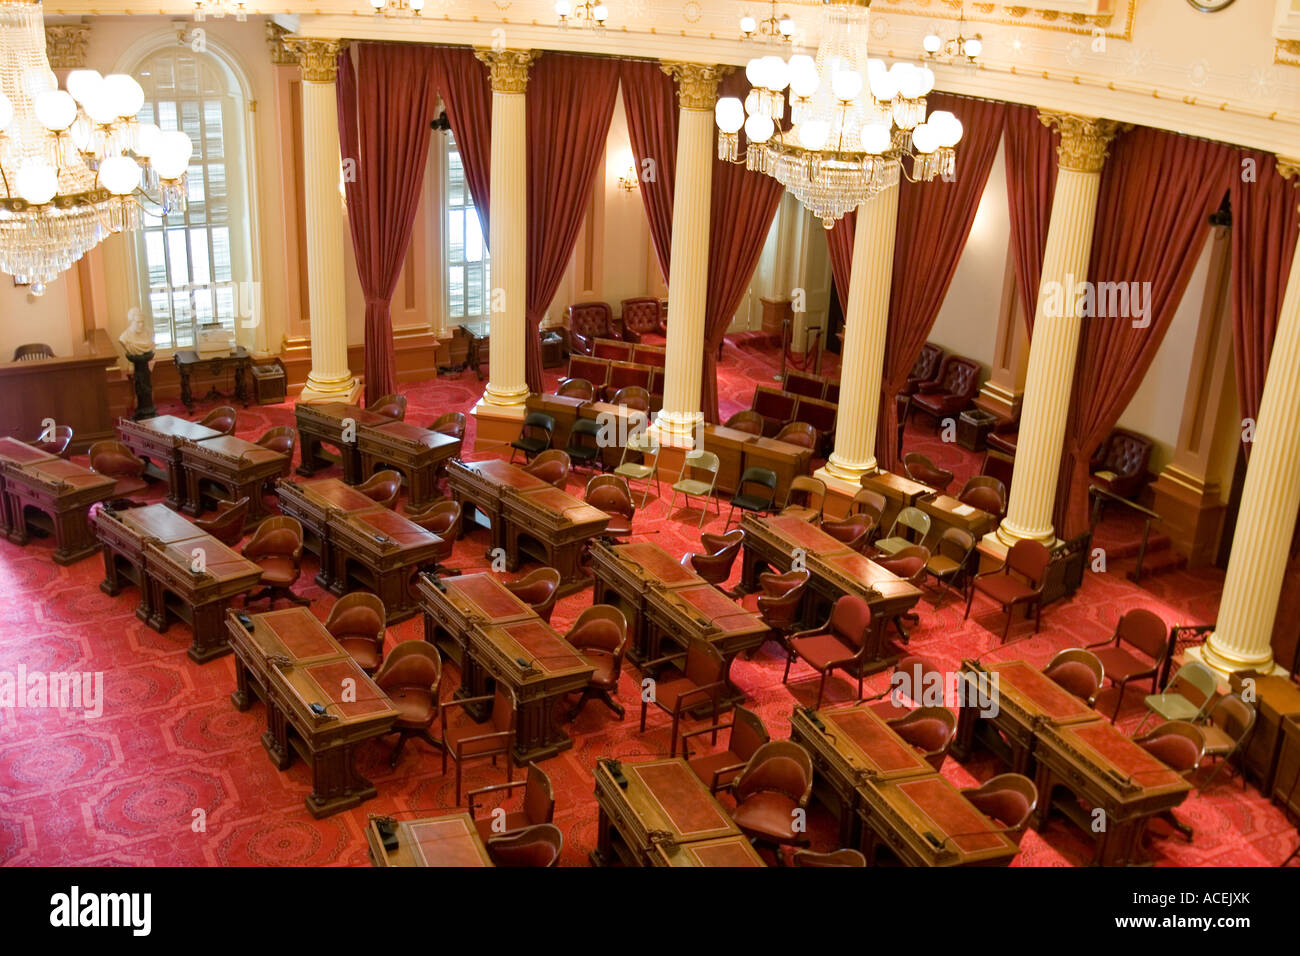 Inside the senate chambers of the California statehouse where senators sit when holding session in Sacramento capitol Stock Photo